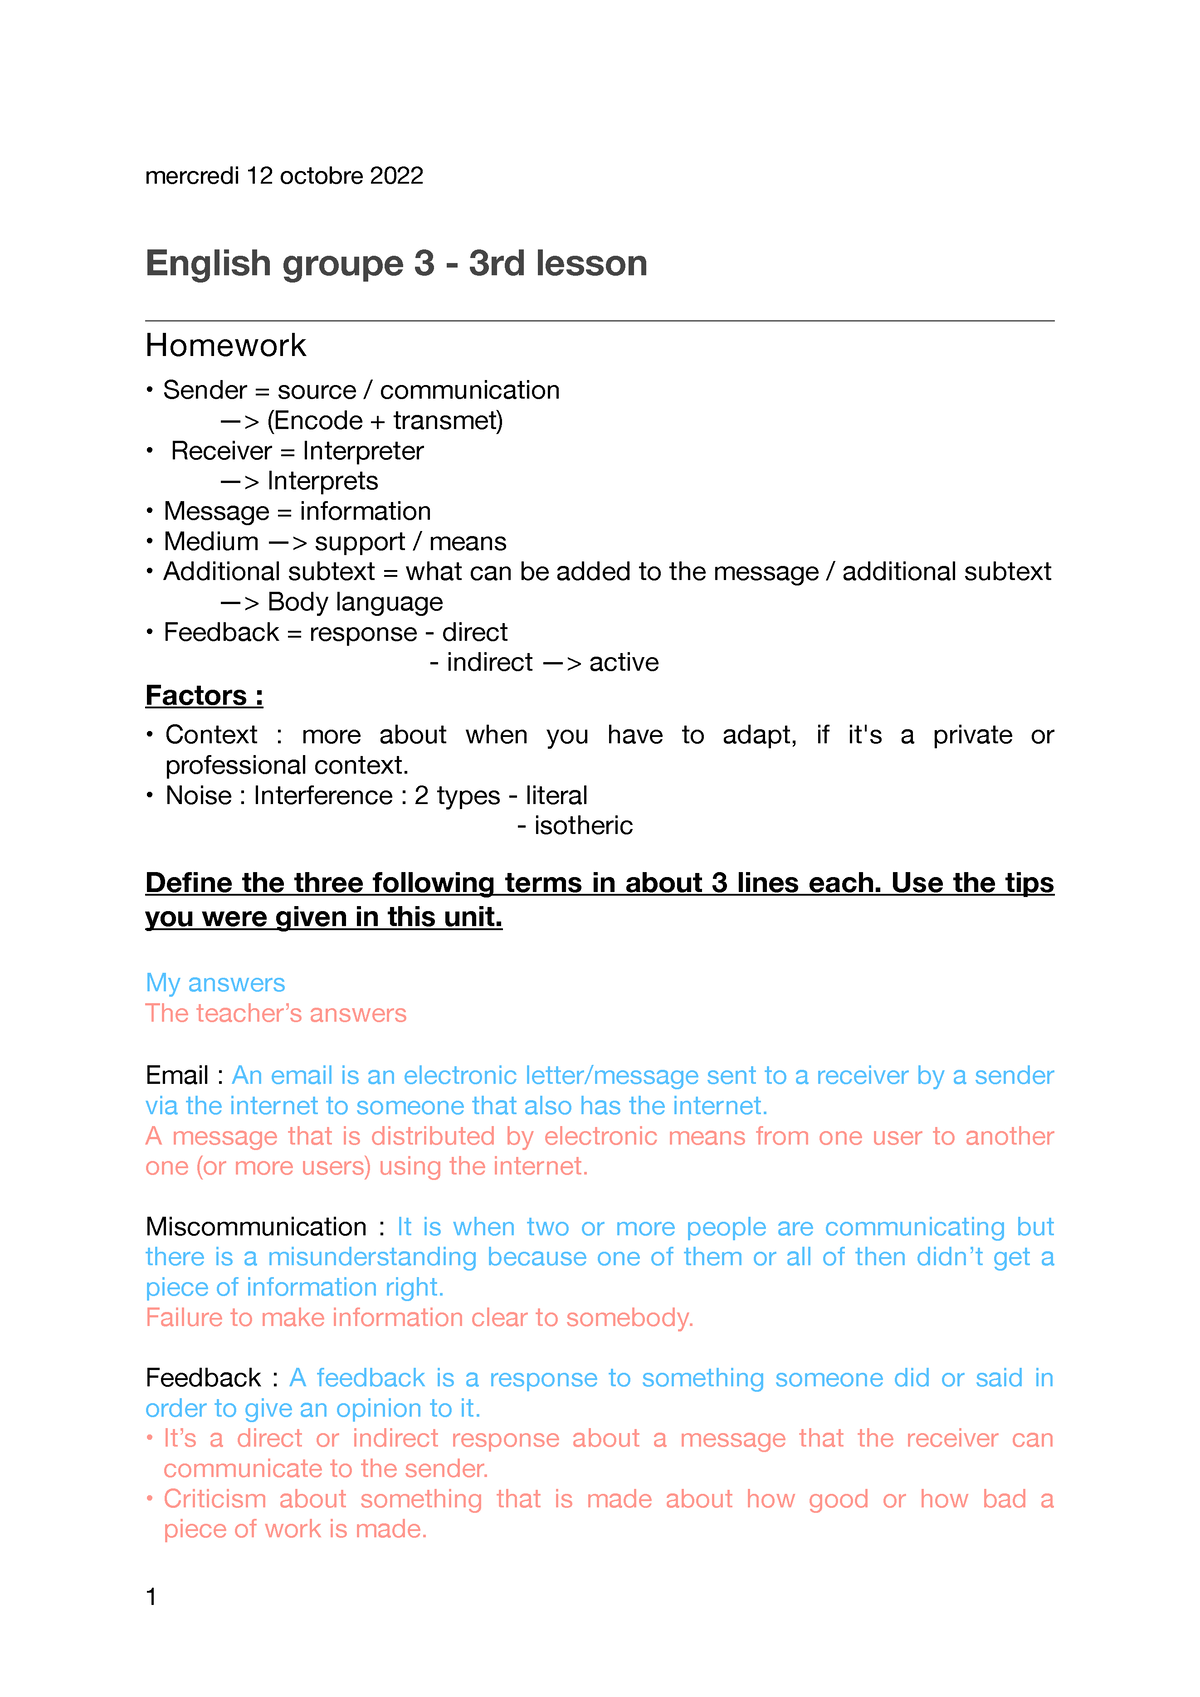 homework en anglais traduction